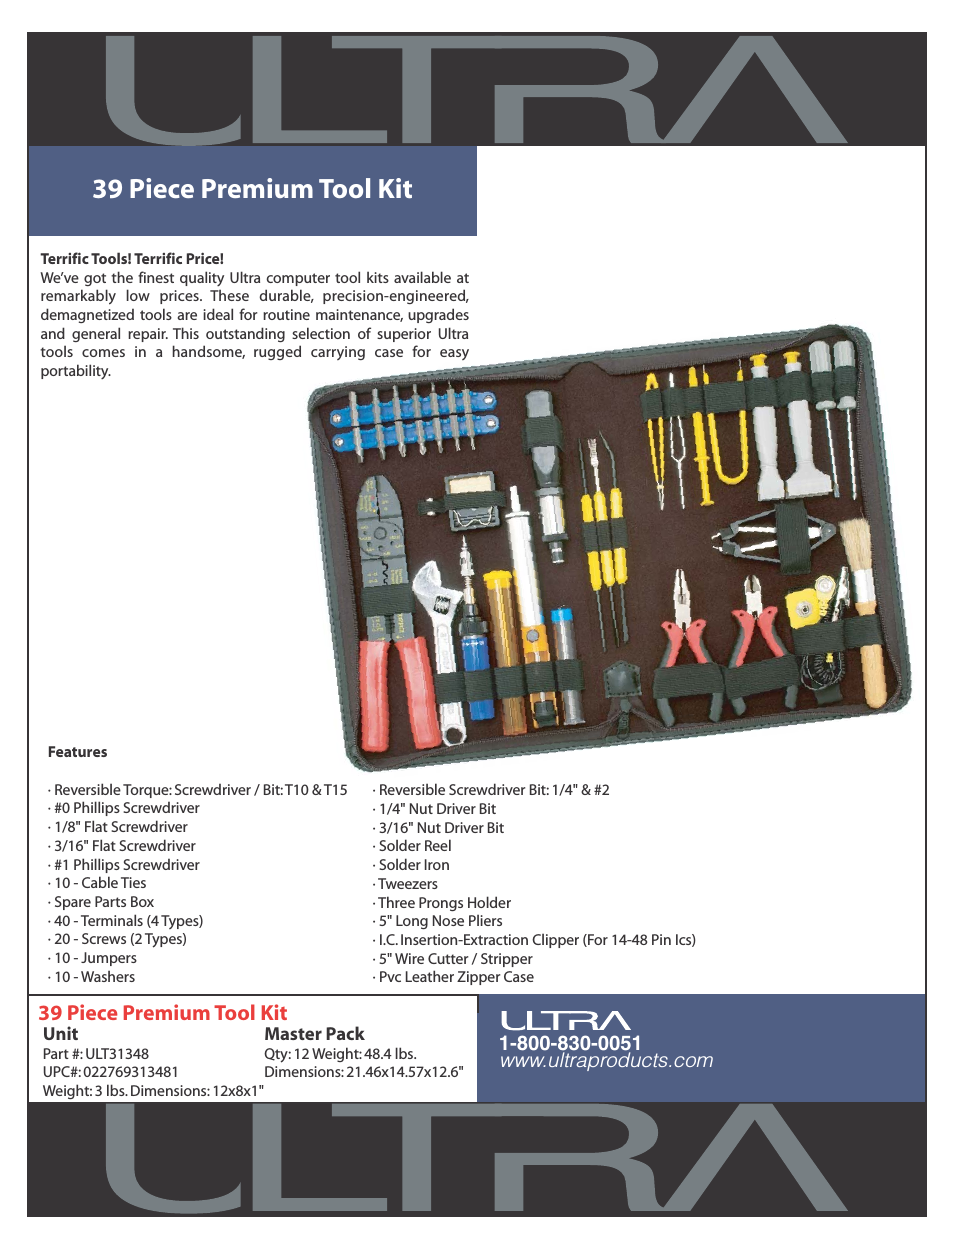 39 Piece Premium Tool Kit ULT31348